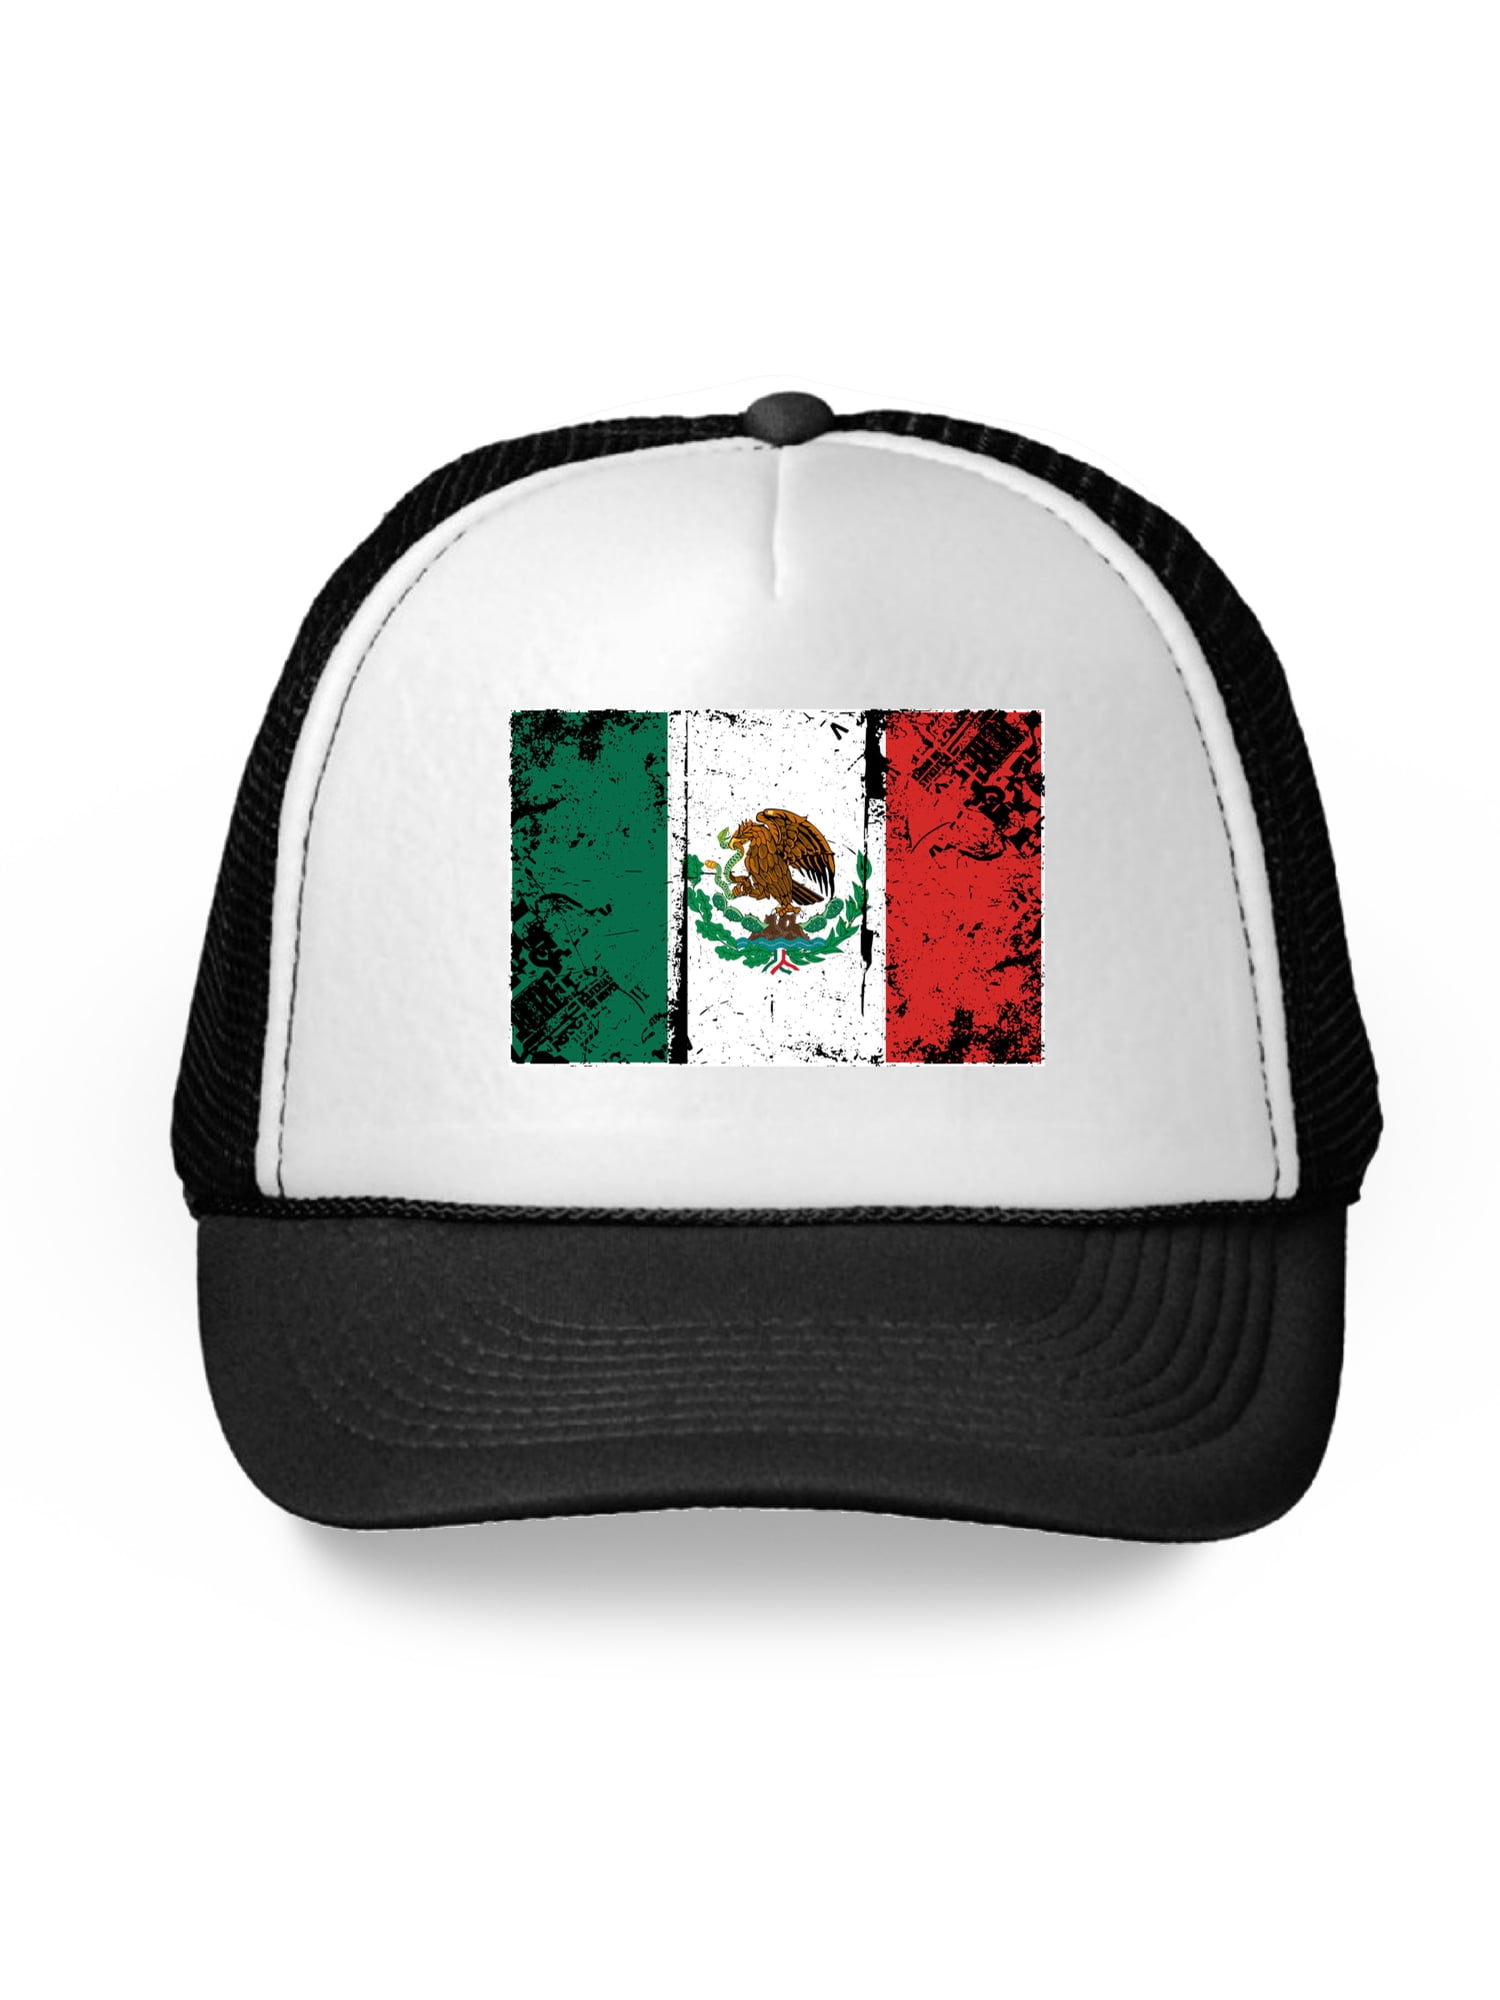 Mexico Mex Mexican Stripes Colors Baseball Ball Cap Hat Ball 6 Panel 1sz Fit 